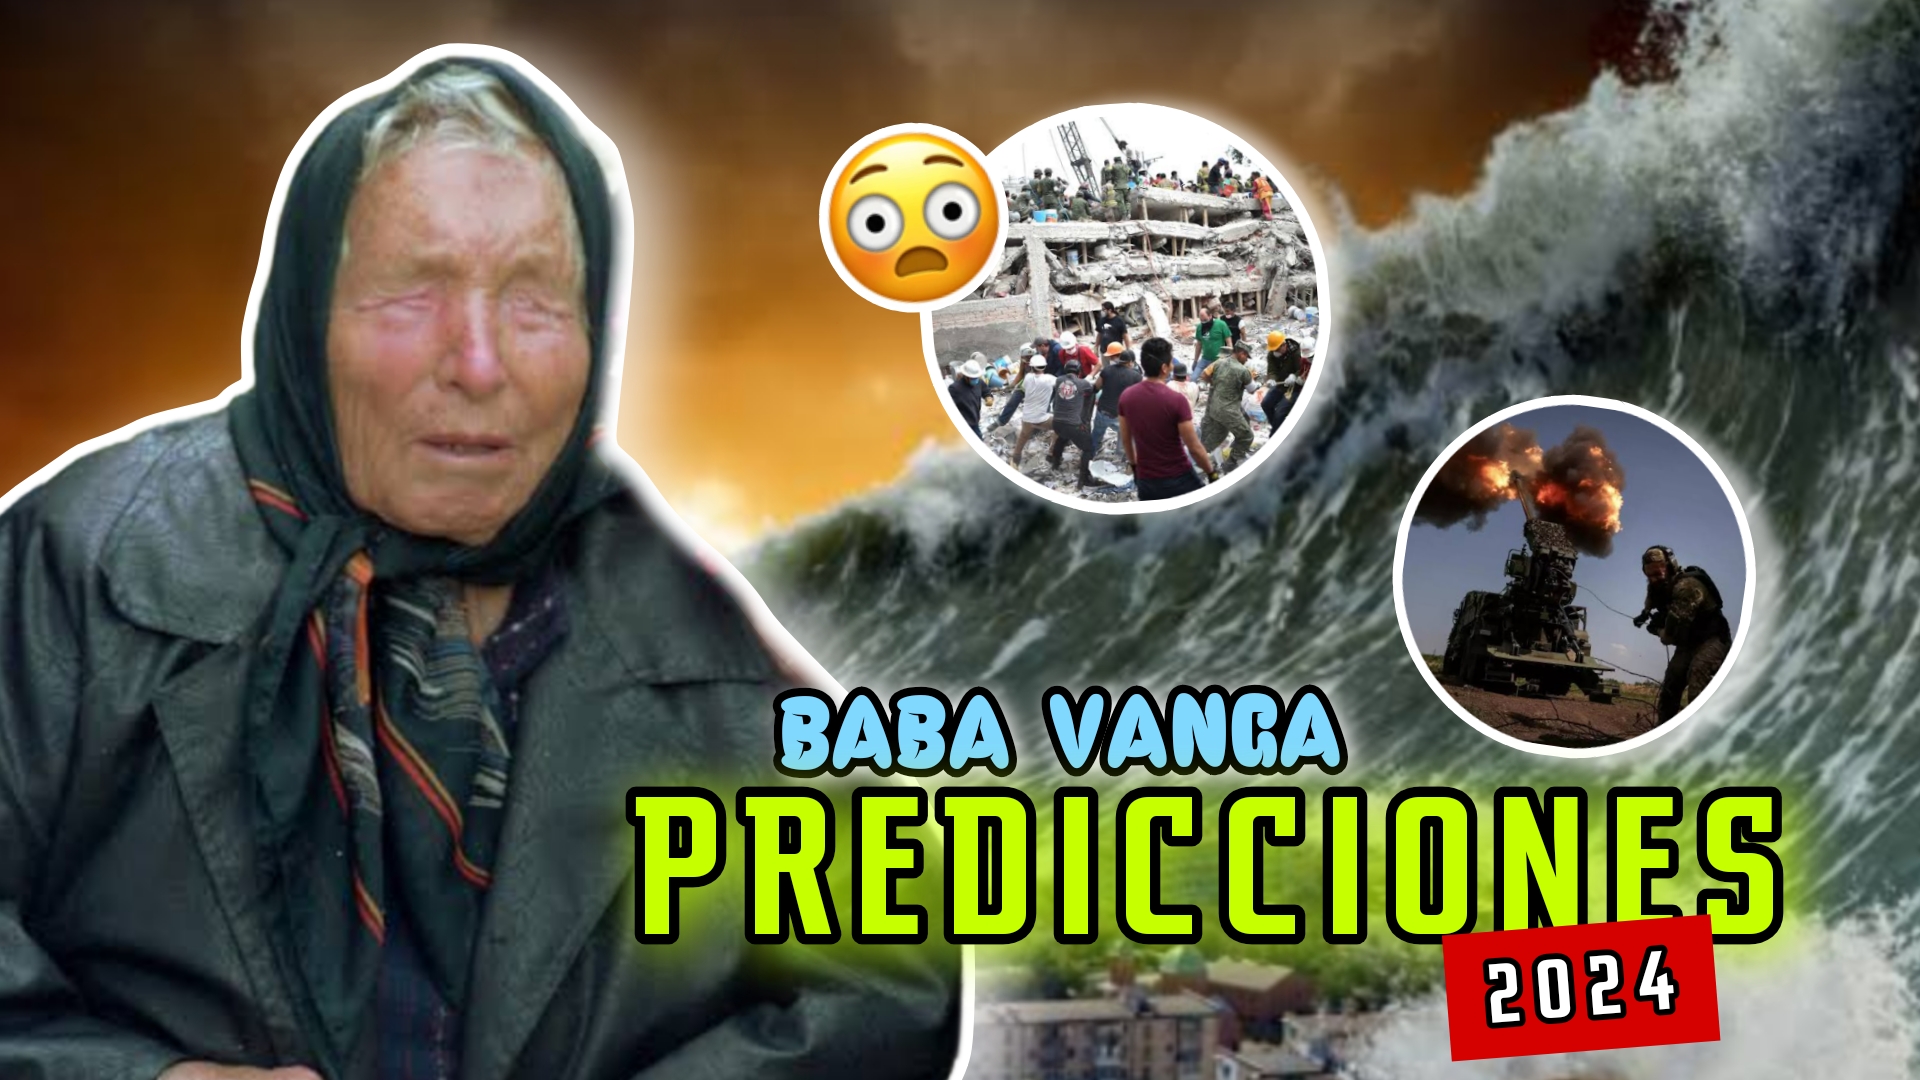 Baba Vanga predicciones